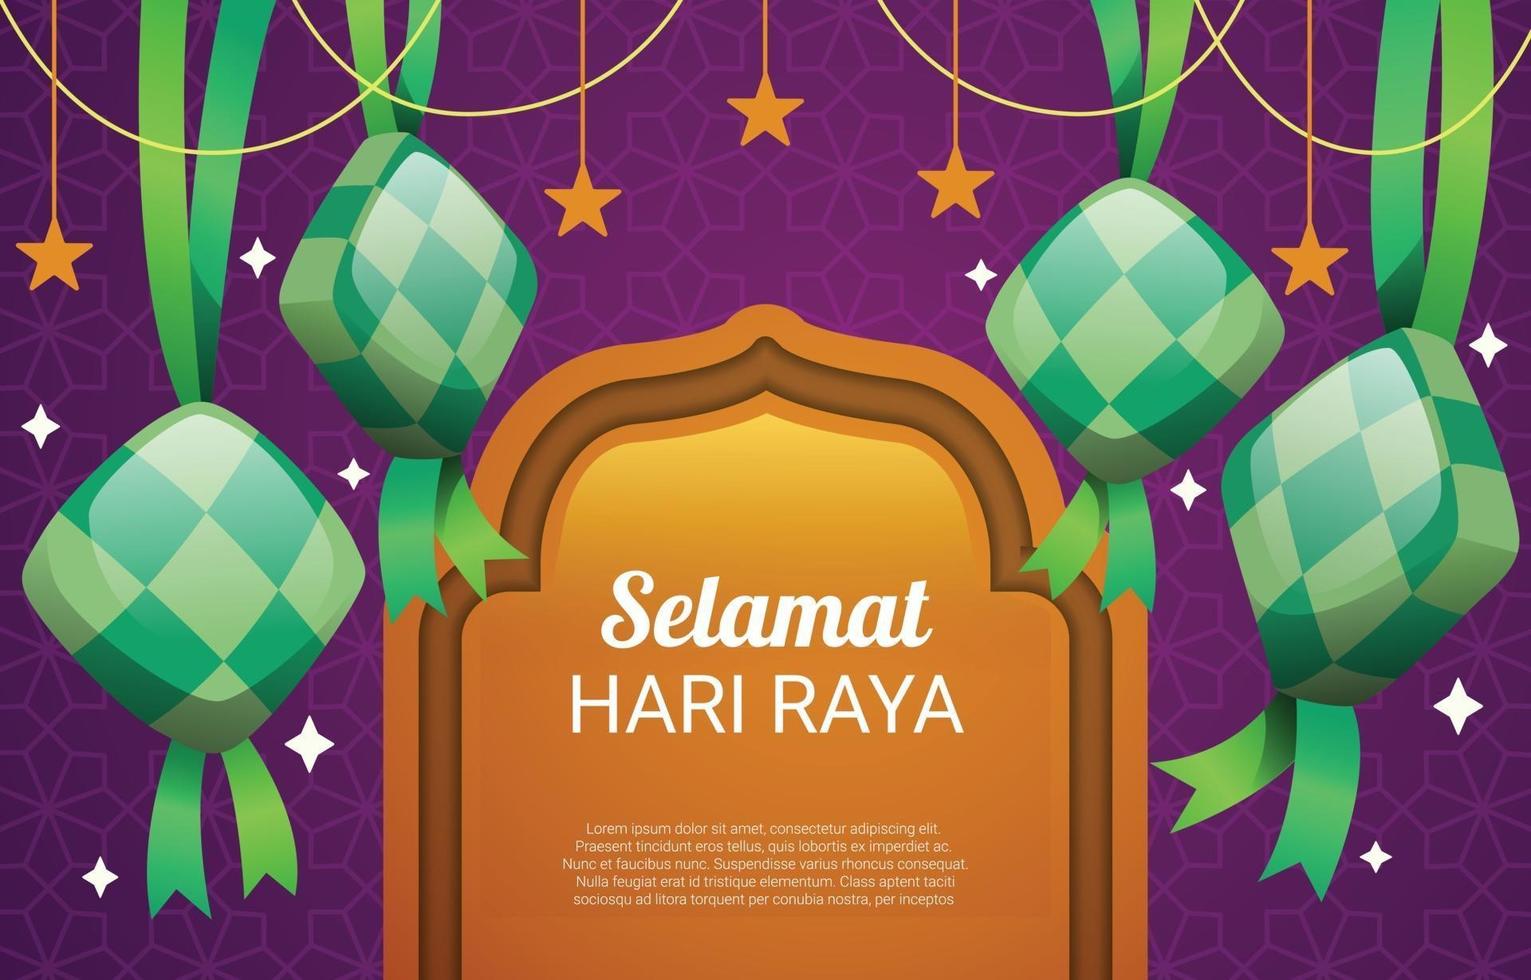 Selamat Hari Raya with Ketupat and Star vector